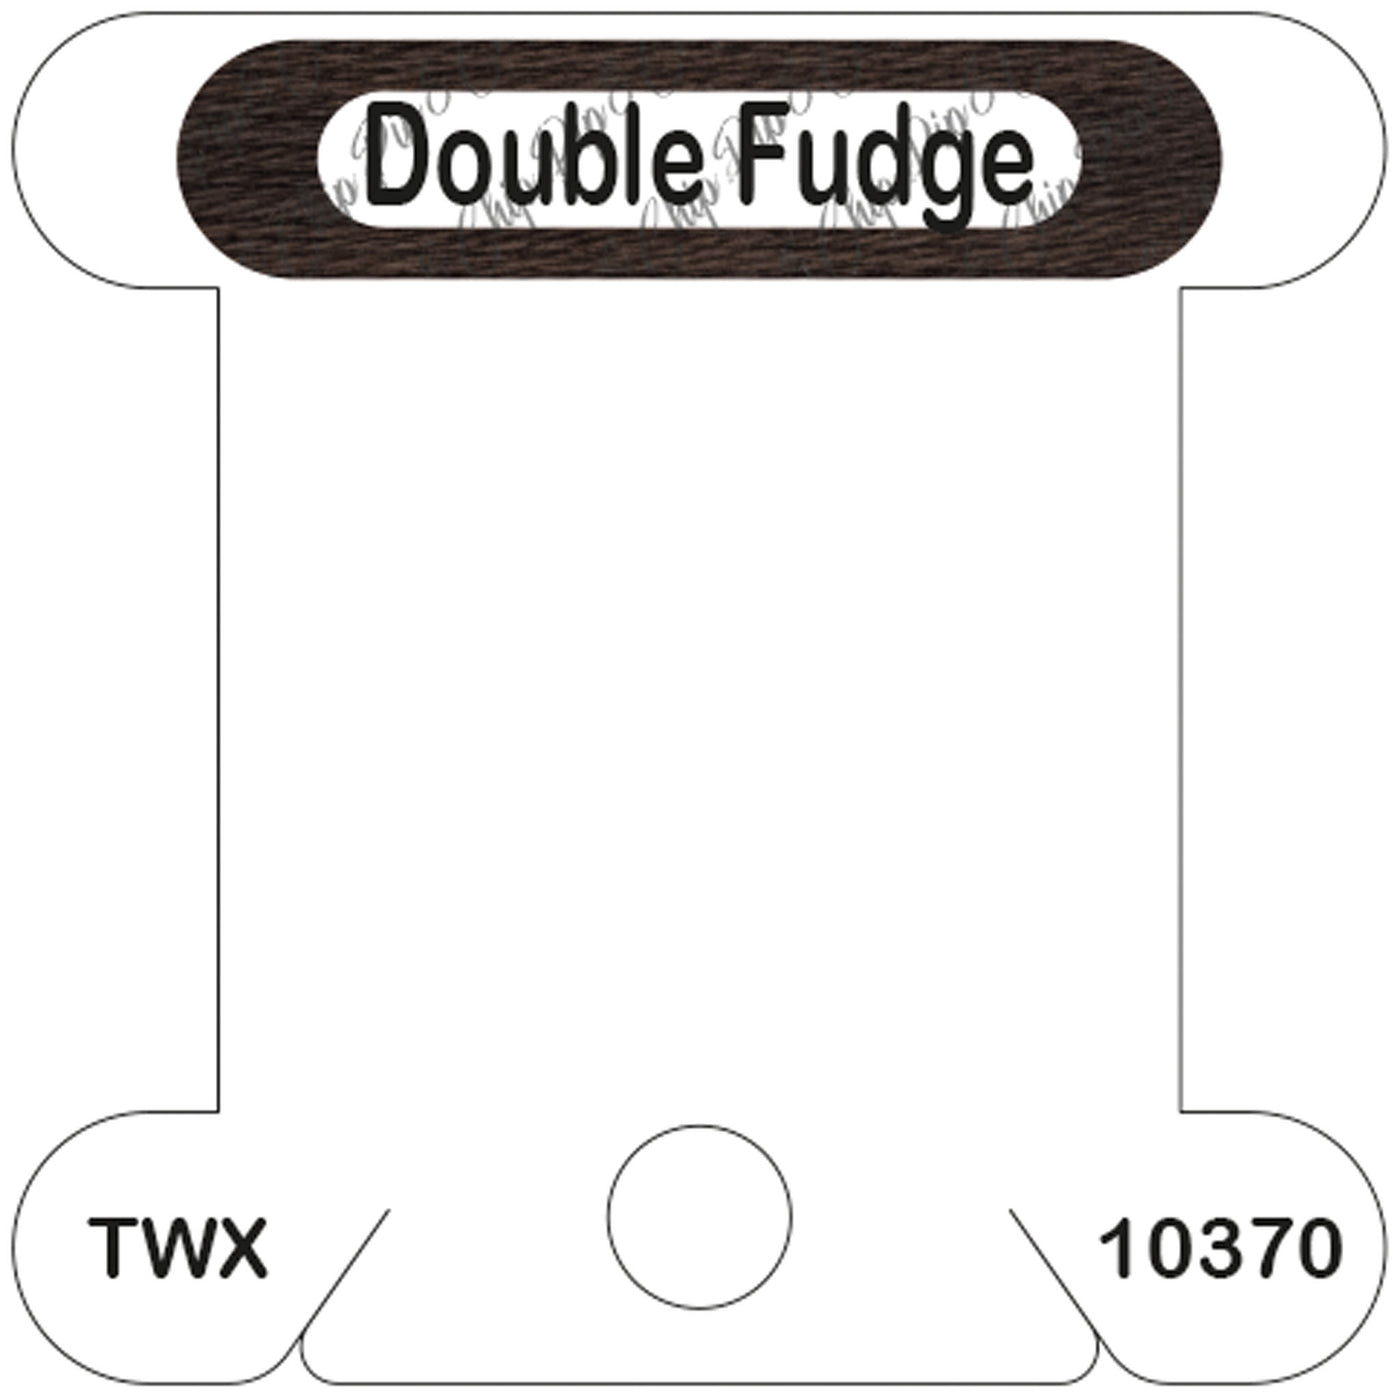 ThreadworX Double Fudge acrylic bobbin